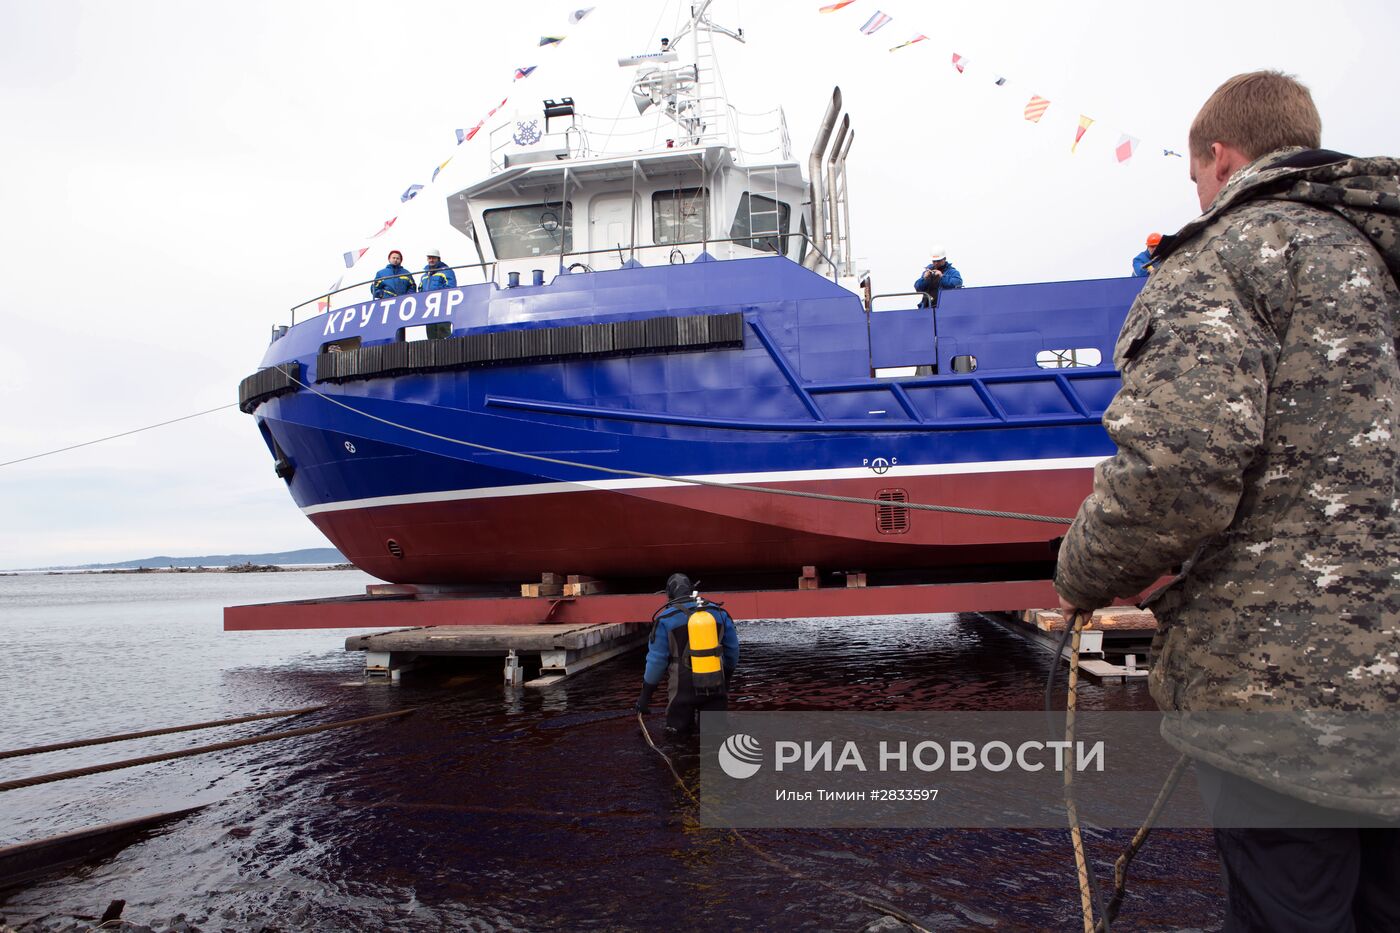 Cпуск на воду лоцмейстерского катера "Крутояр" в Петрозаводске